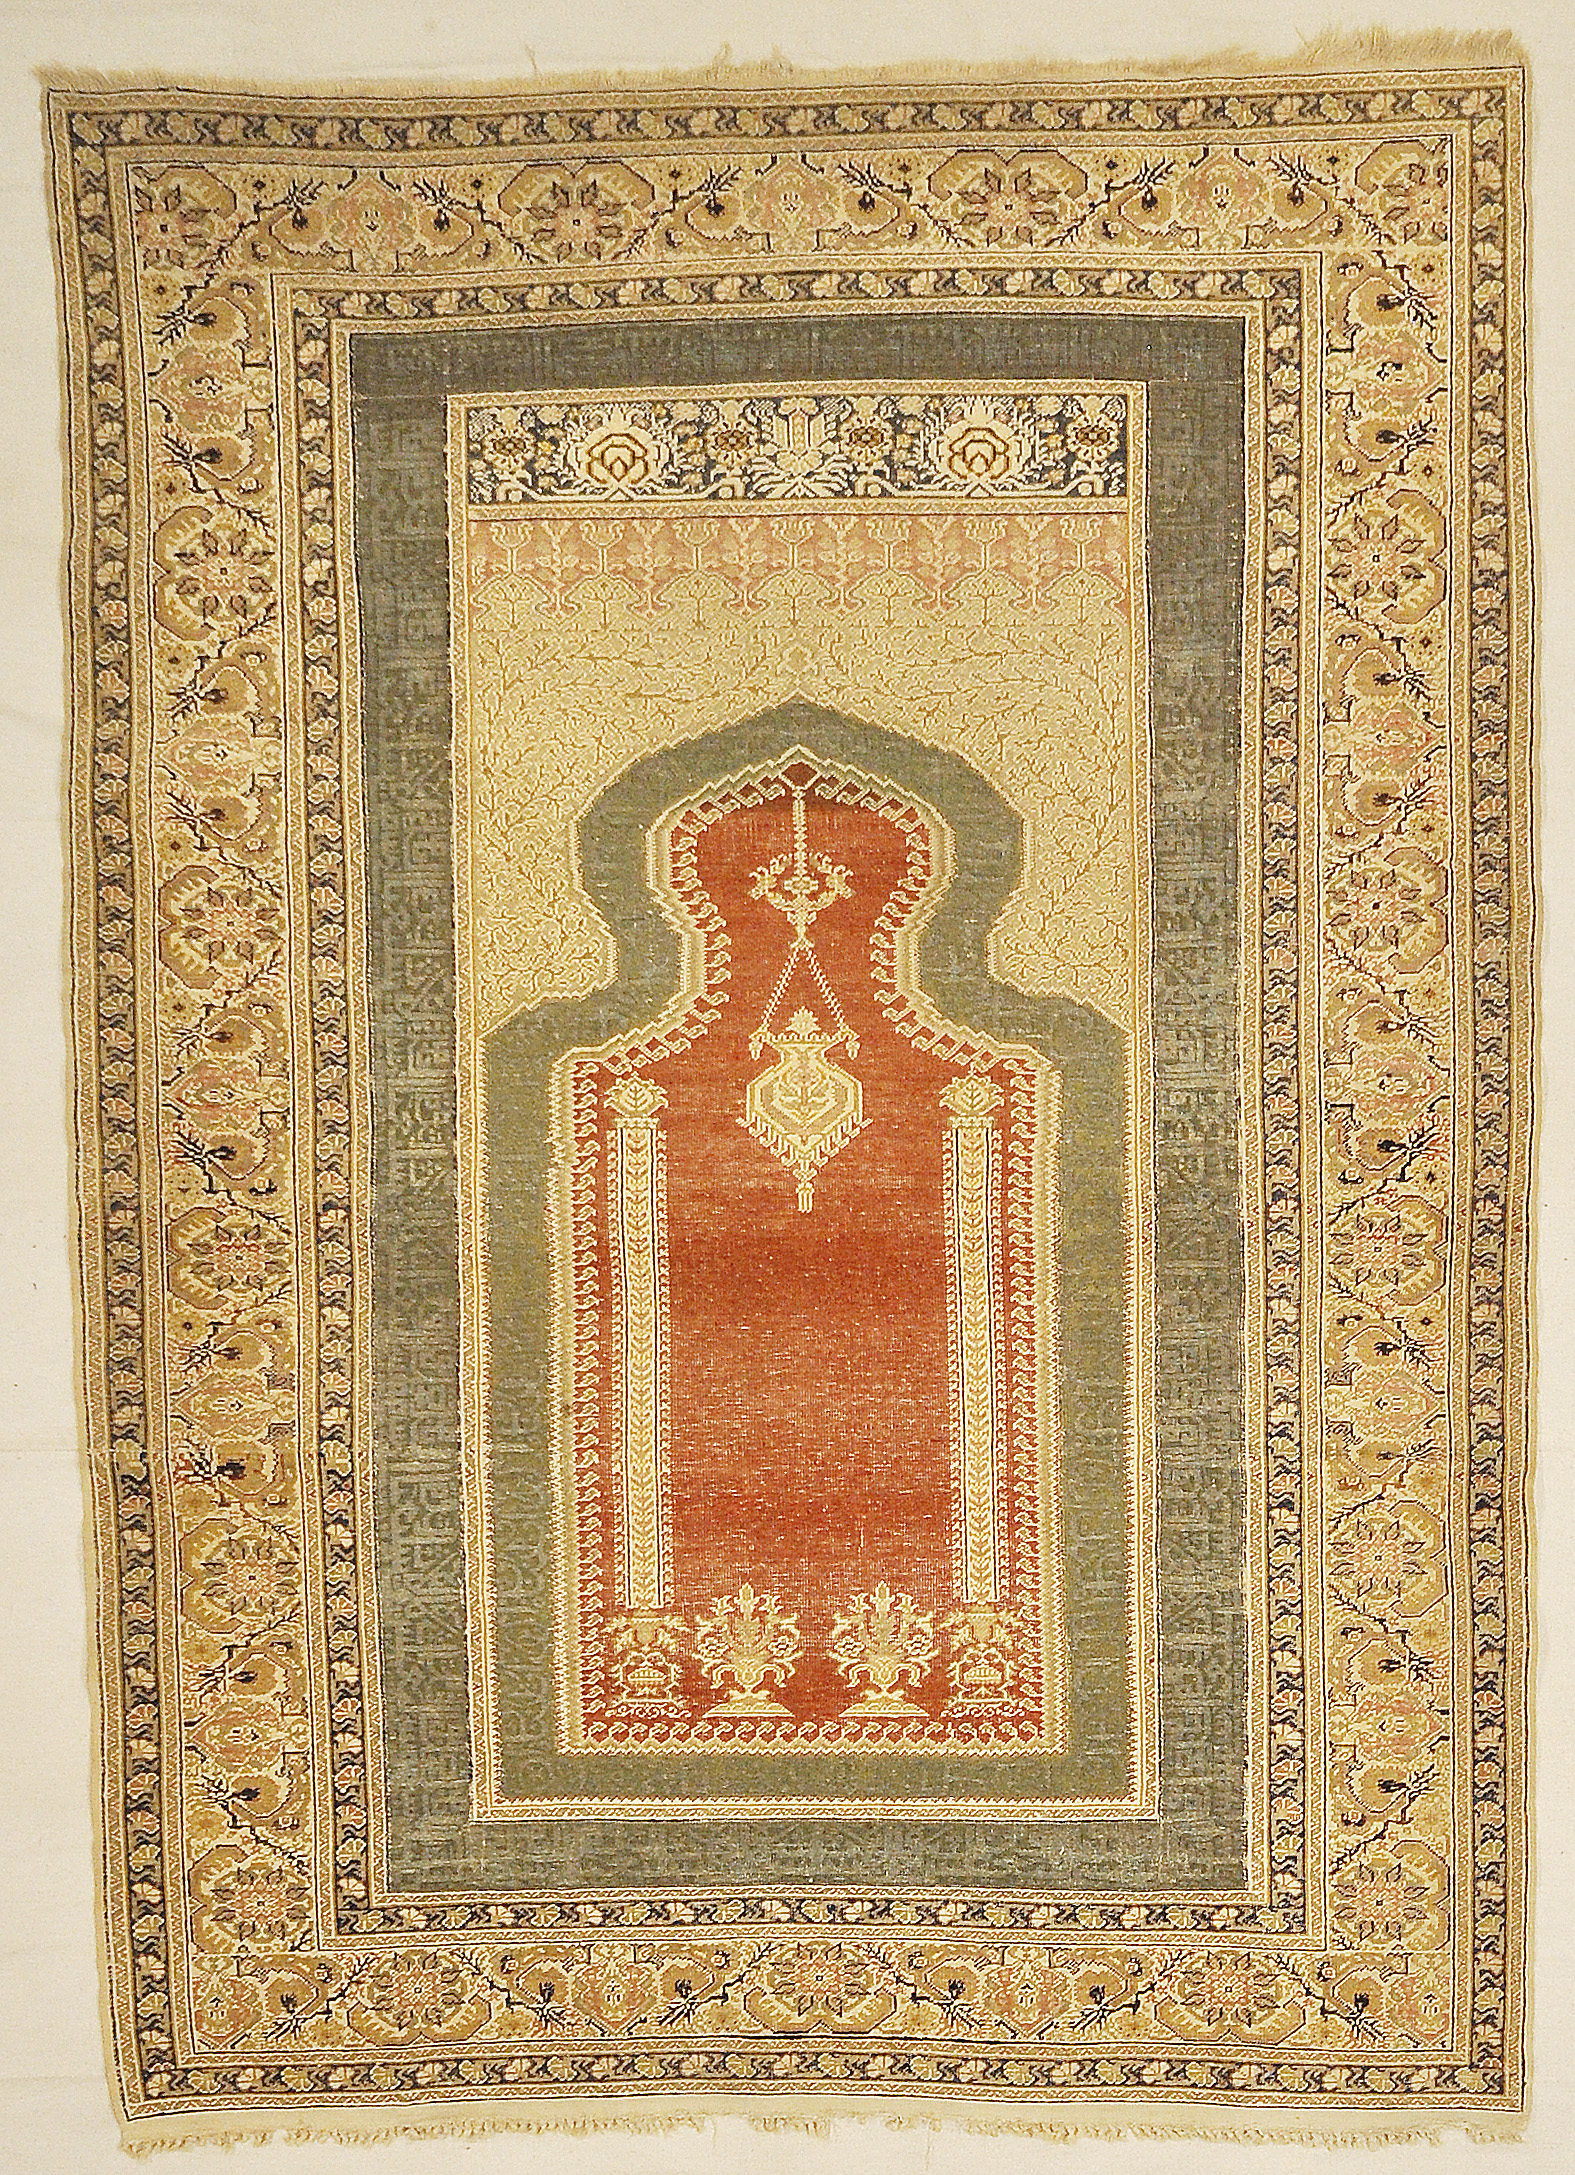 Unique Antique Turkish Silk Prayer Rug with Two Metal Thread Scripts Genuine Authentic Woven Carpet Art Santa Barbara Design Center Rugs and More